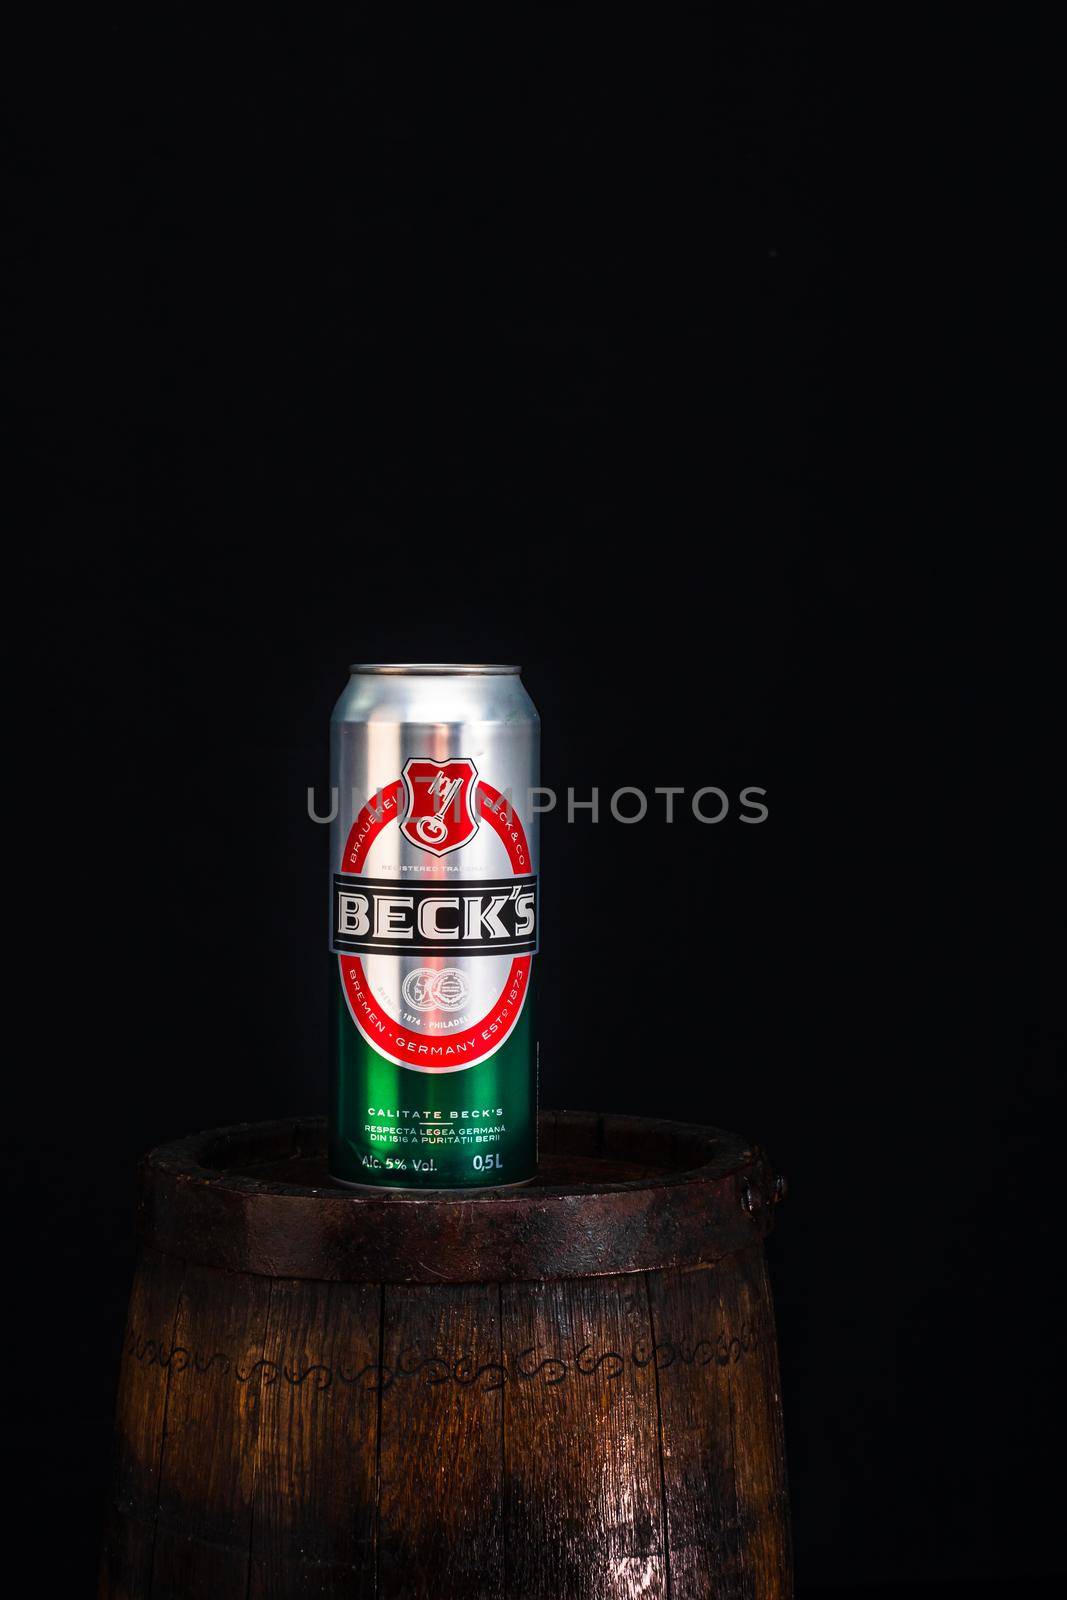 Can of Becks beer on beer barrel with dark background. Illustrative editorial photo Bucharest, Romania, 2021 by vladispas